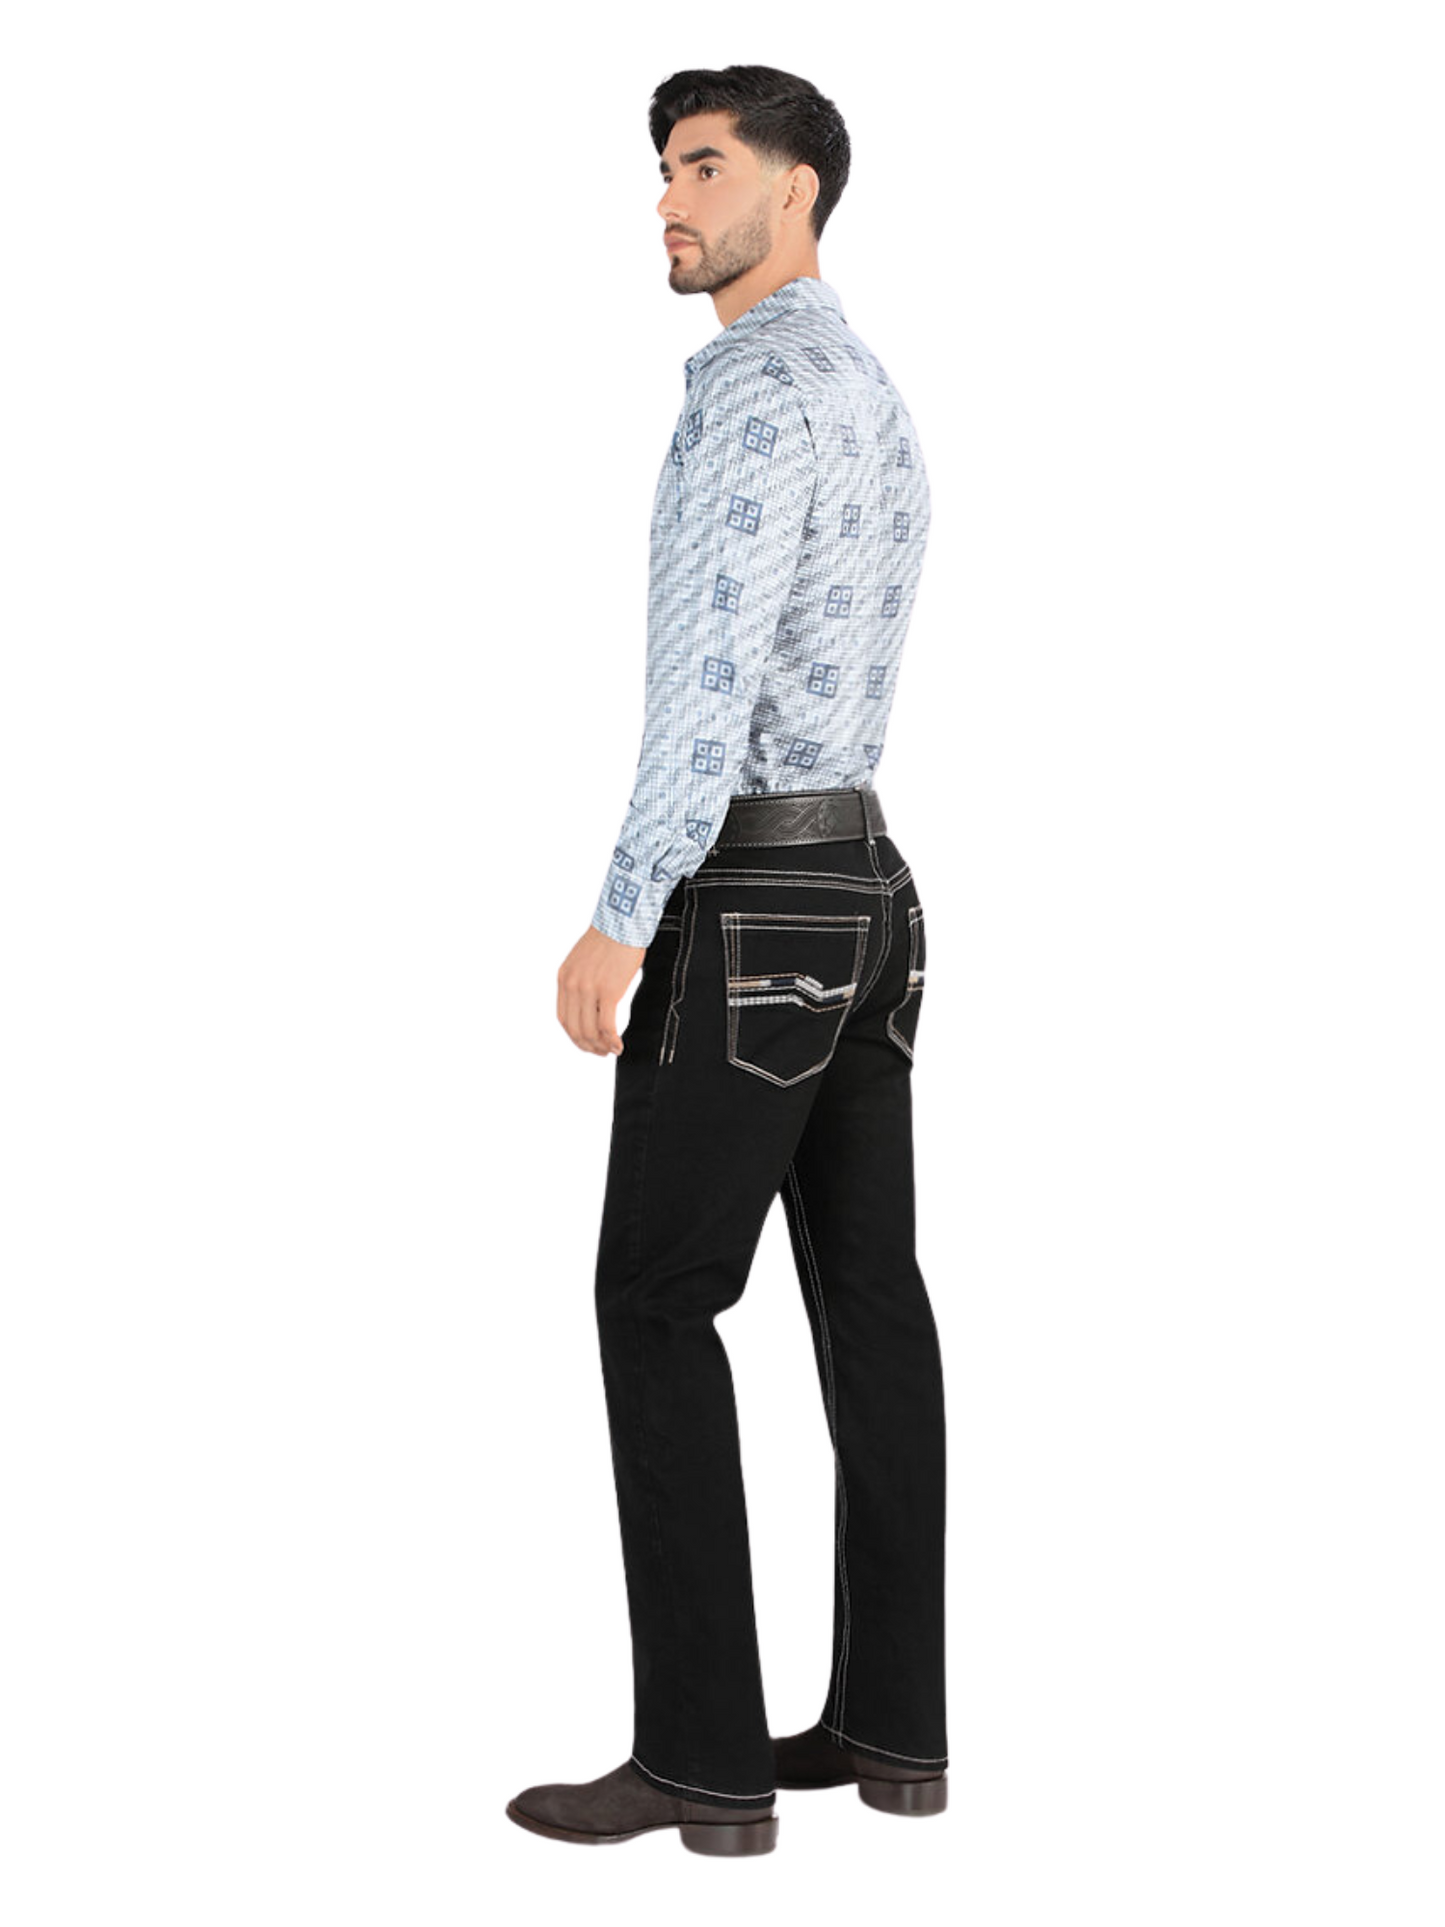 Stretch Denim Jeans for Men 'Montero' - ID: 4602 Denim Jeans Montero